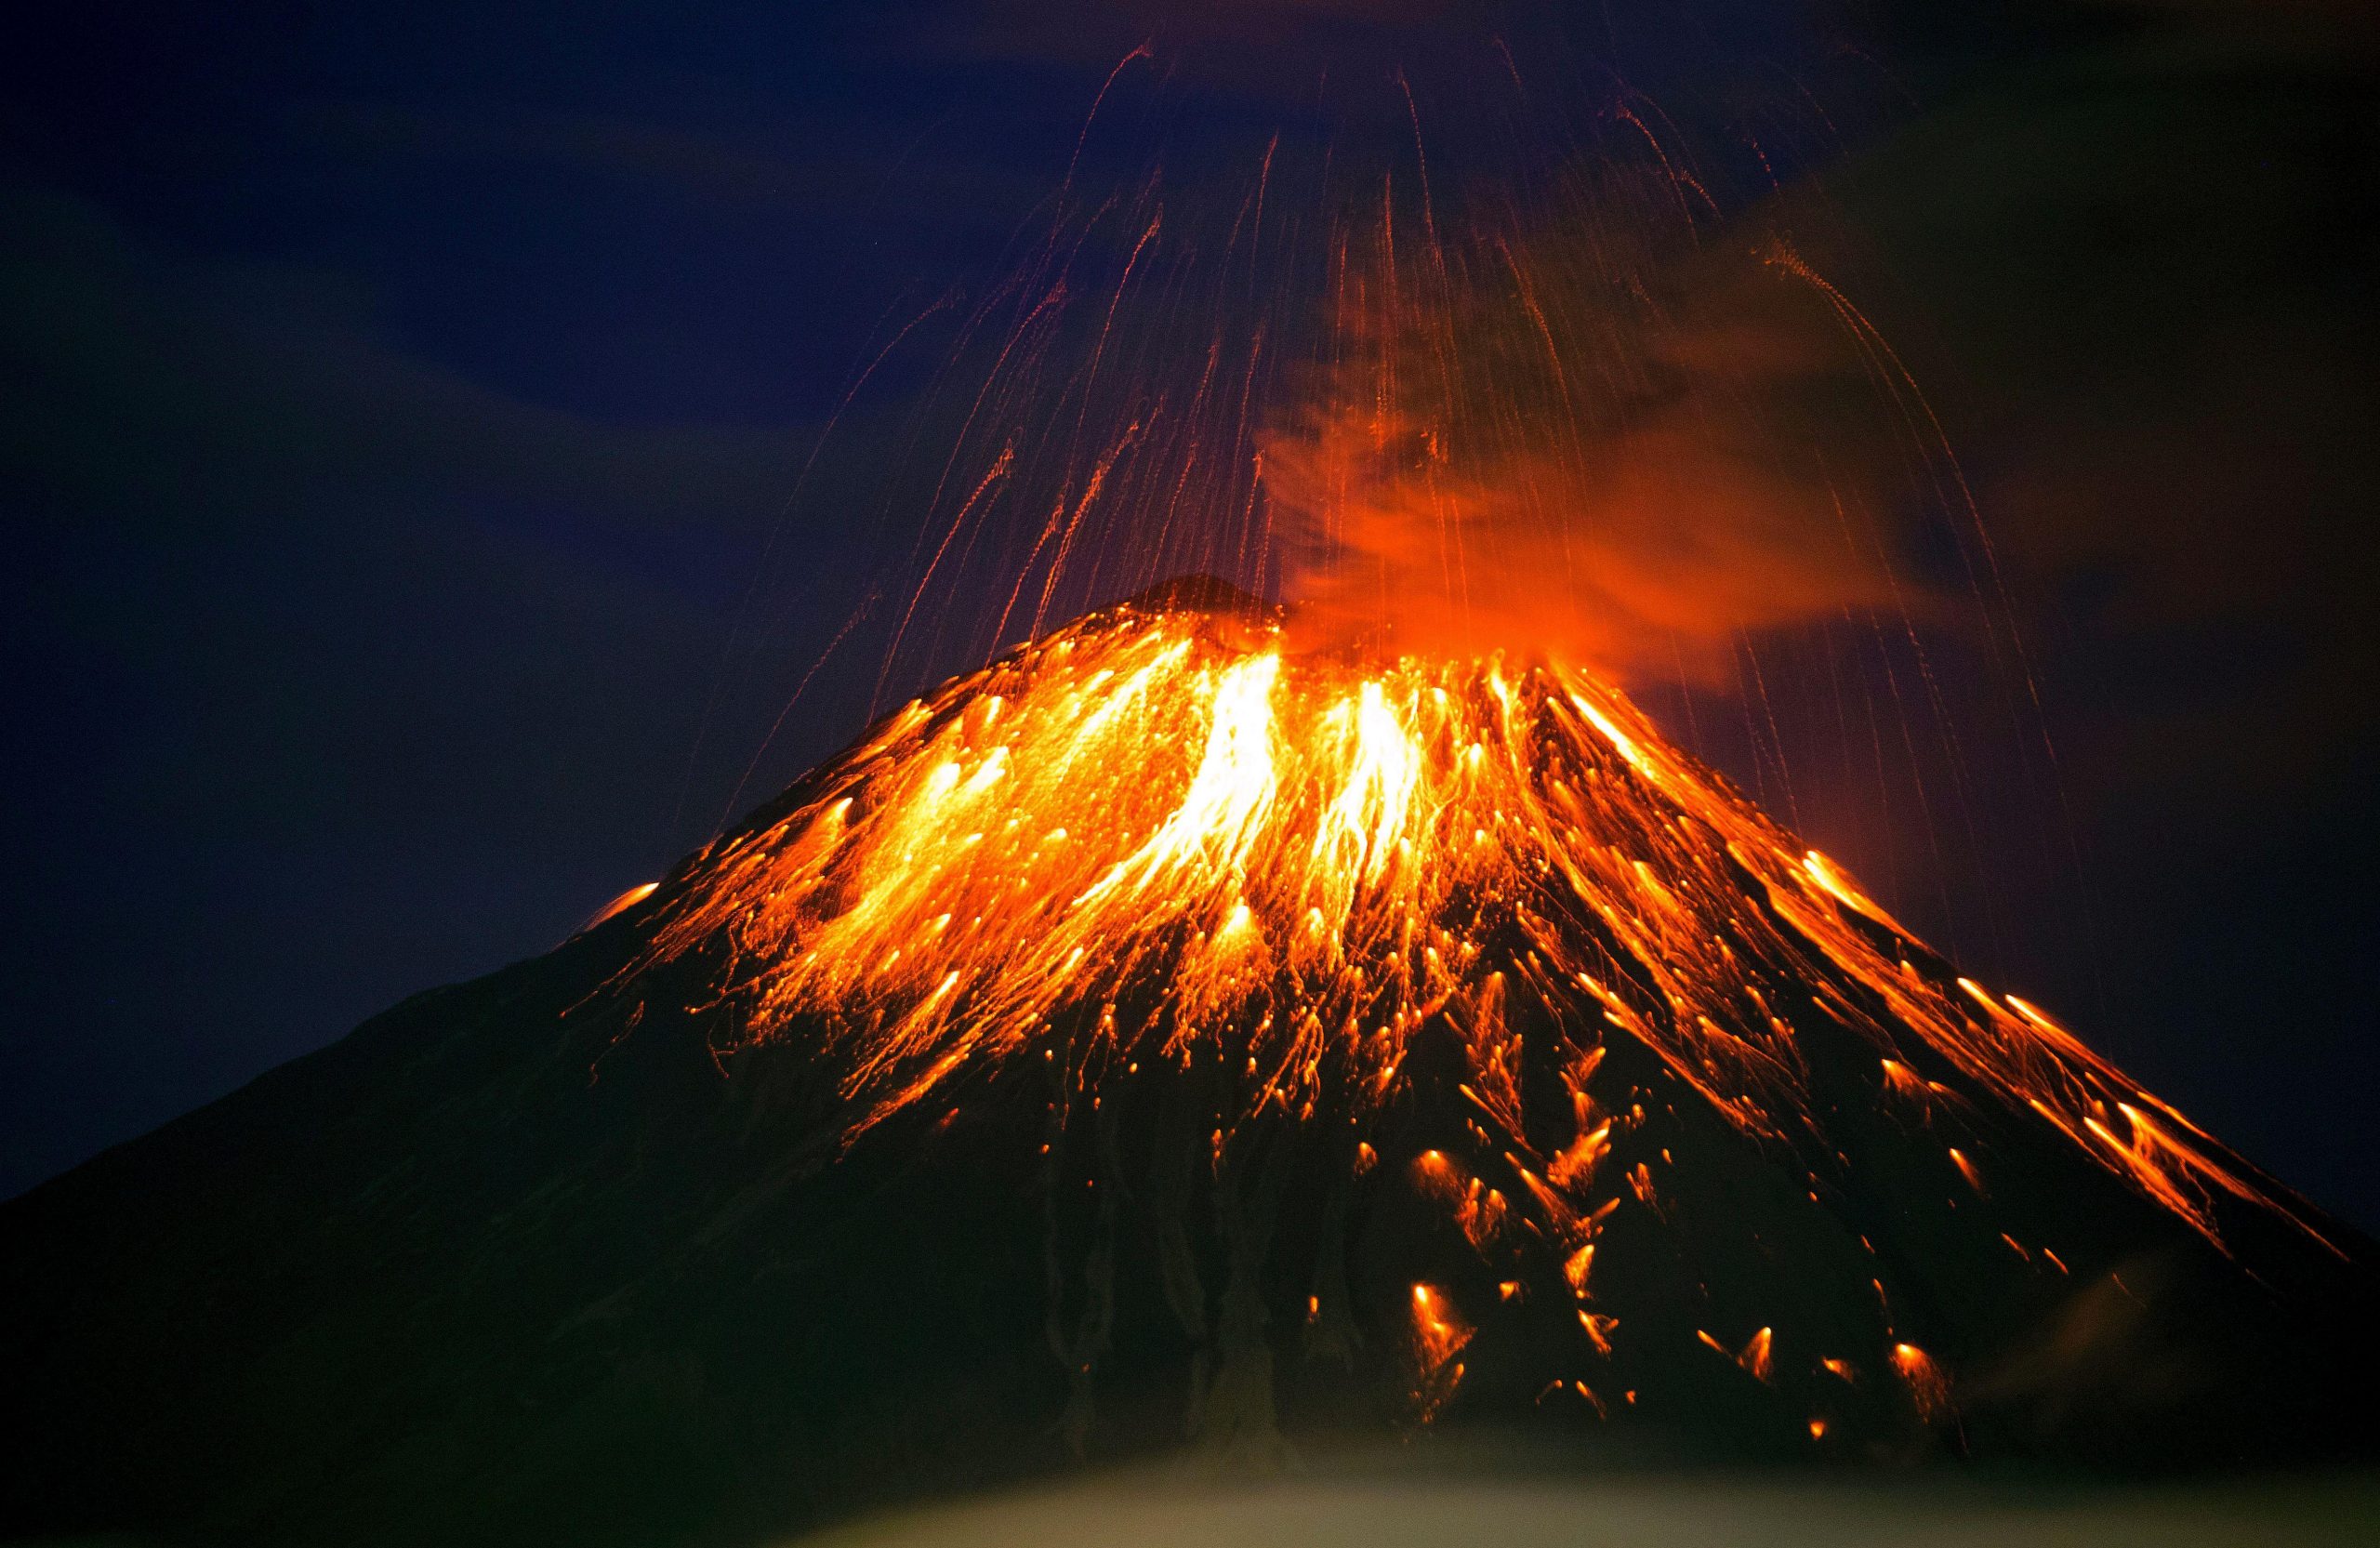 The Black Giant volcano  Tungurahua  in Ecuador shows early 